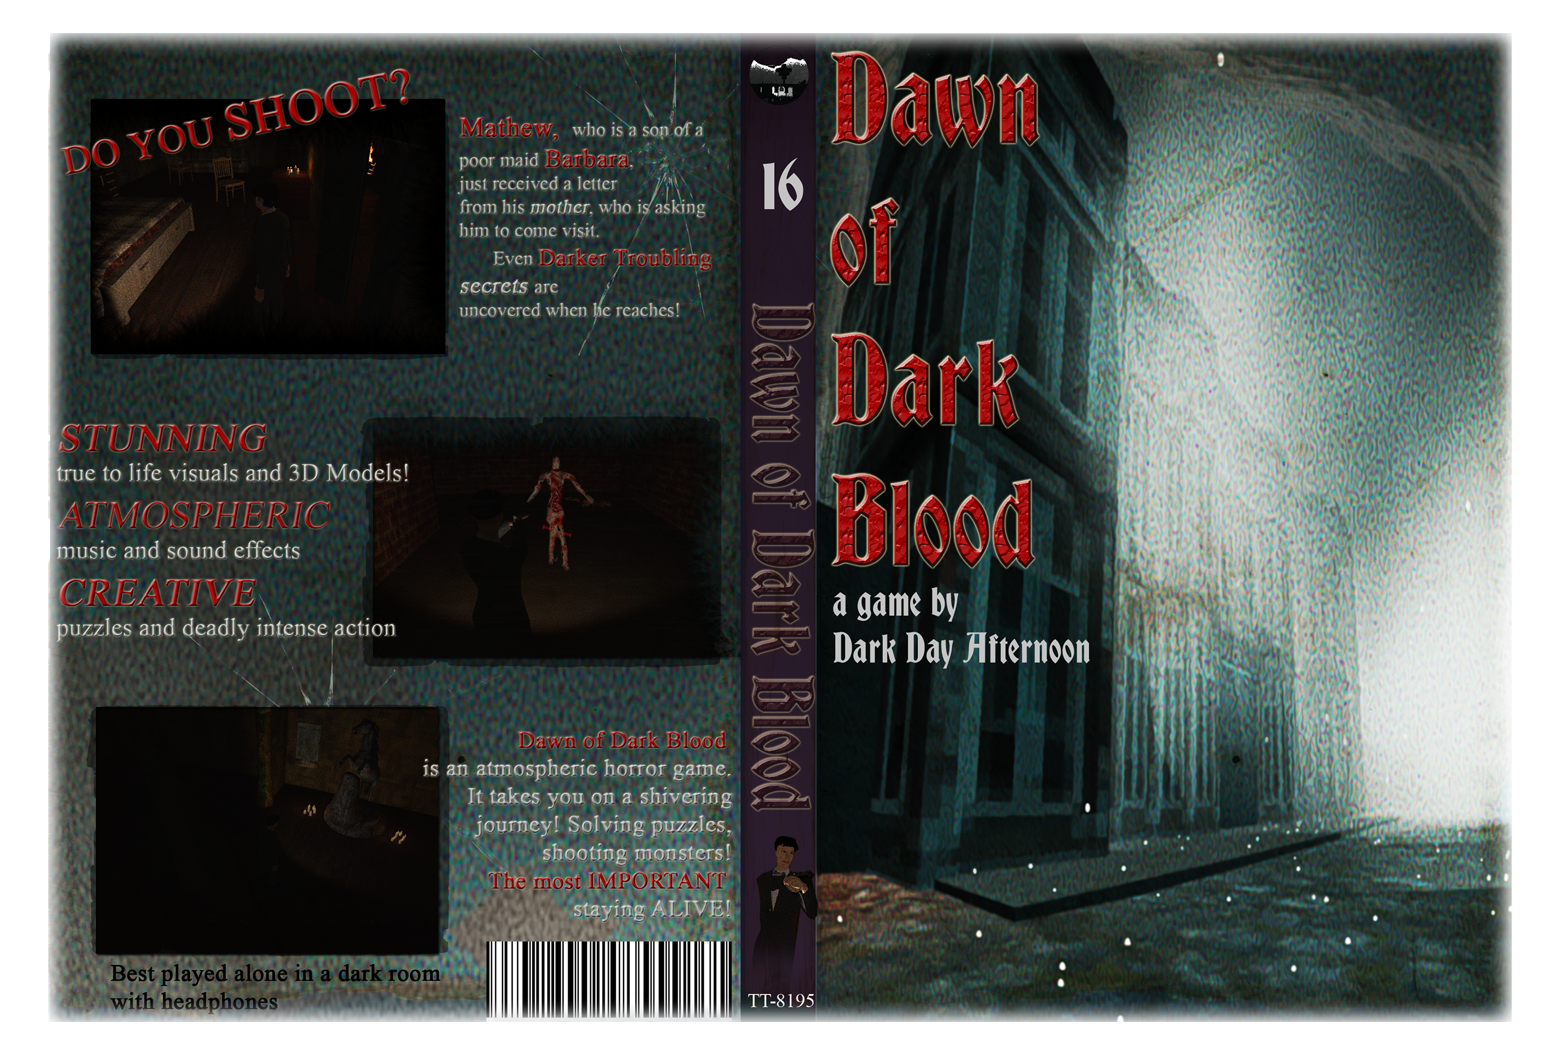 Dawn of Dark Blood